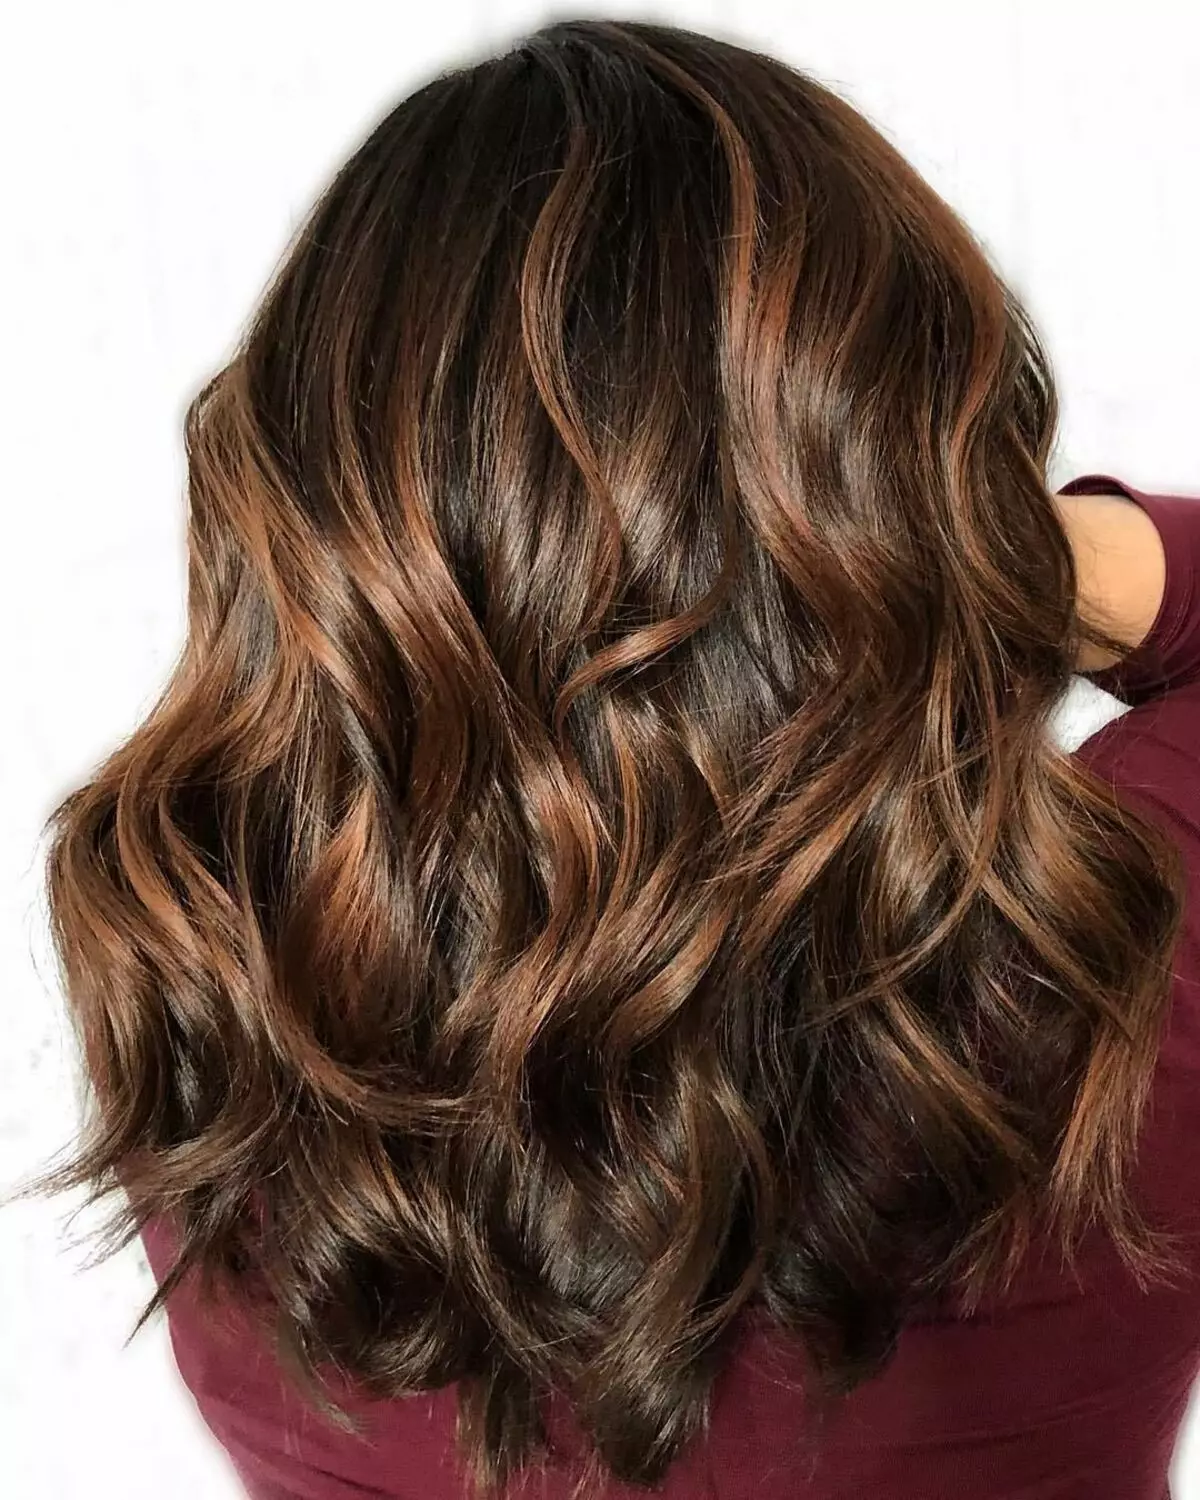 Caramel τήξη (46 φωτογραφίες): Ποιο είναι το χρώμα των μαλλιών που συνδυάζεται καλύτερα με την τήξη κάτω από καραμέλα; Χαρακτηριστικά της διαδικασίας για σκούρα, φωτεινά και ξανθά μαλλιά 5368_2